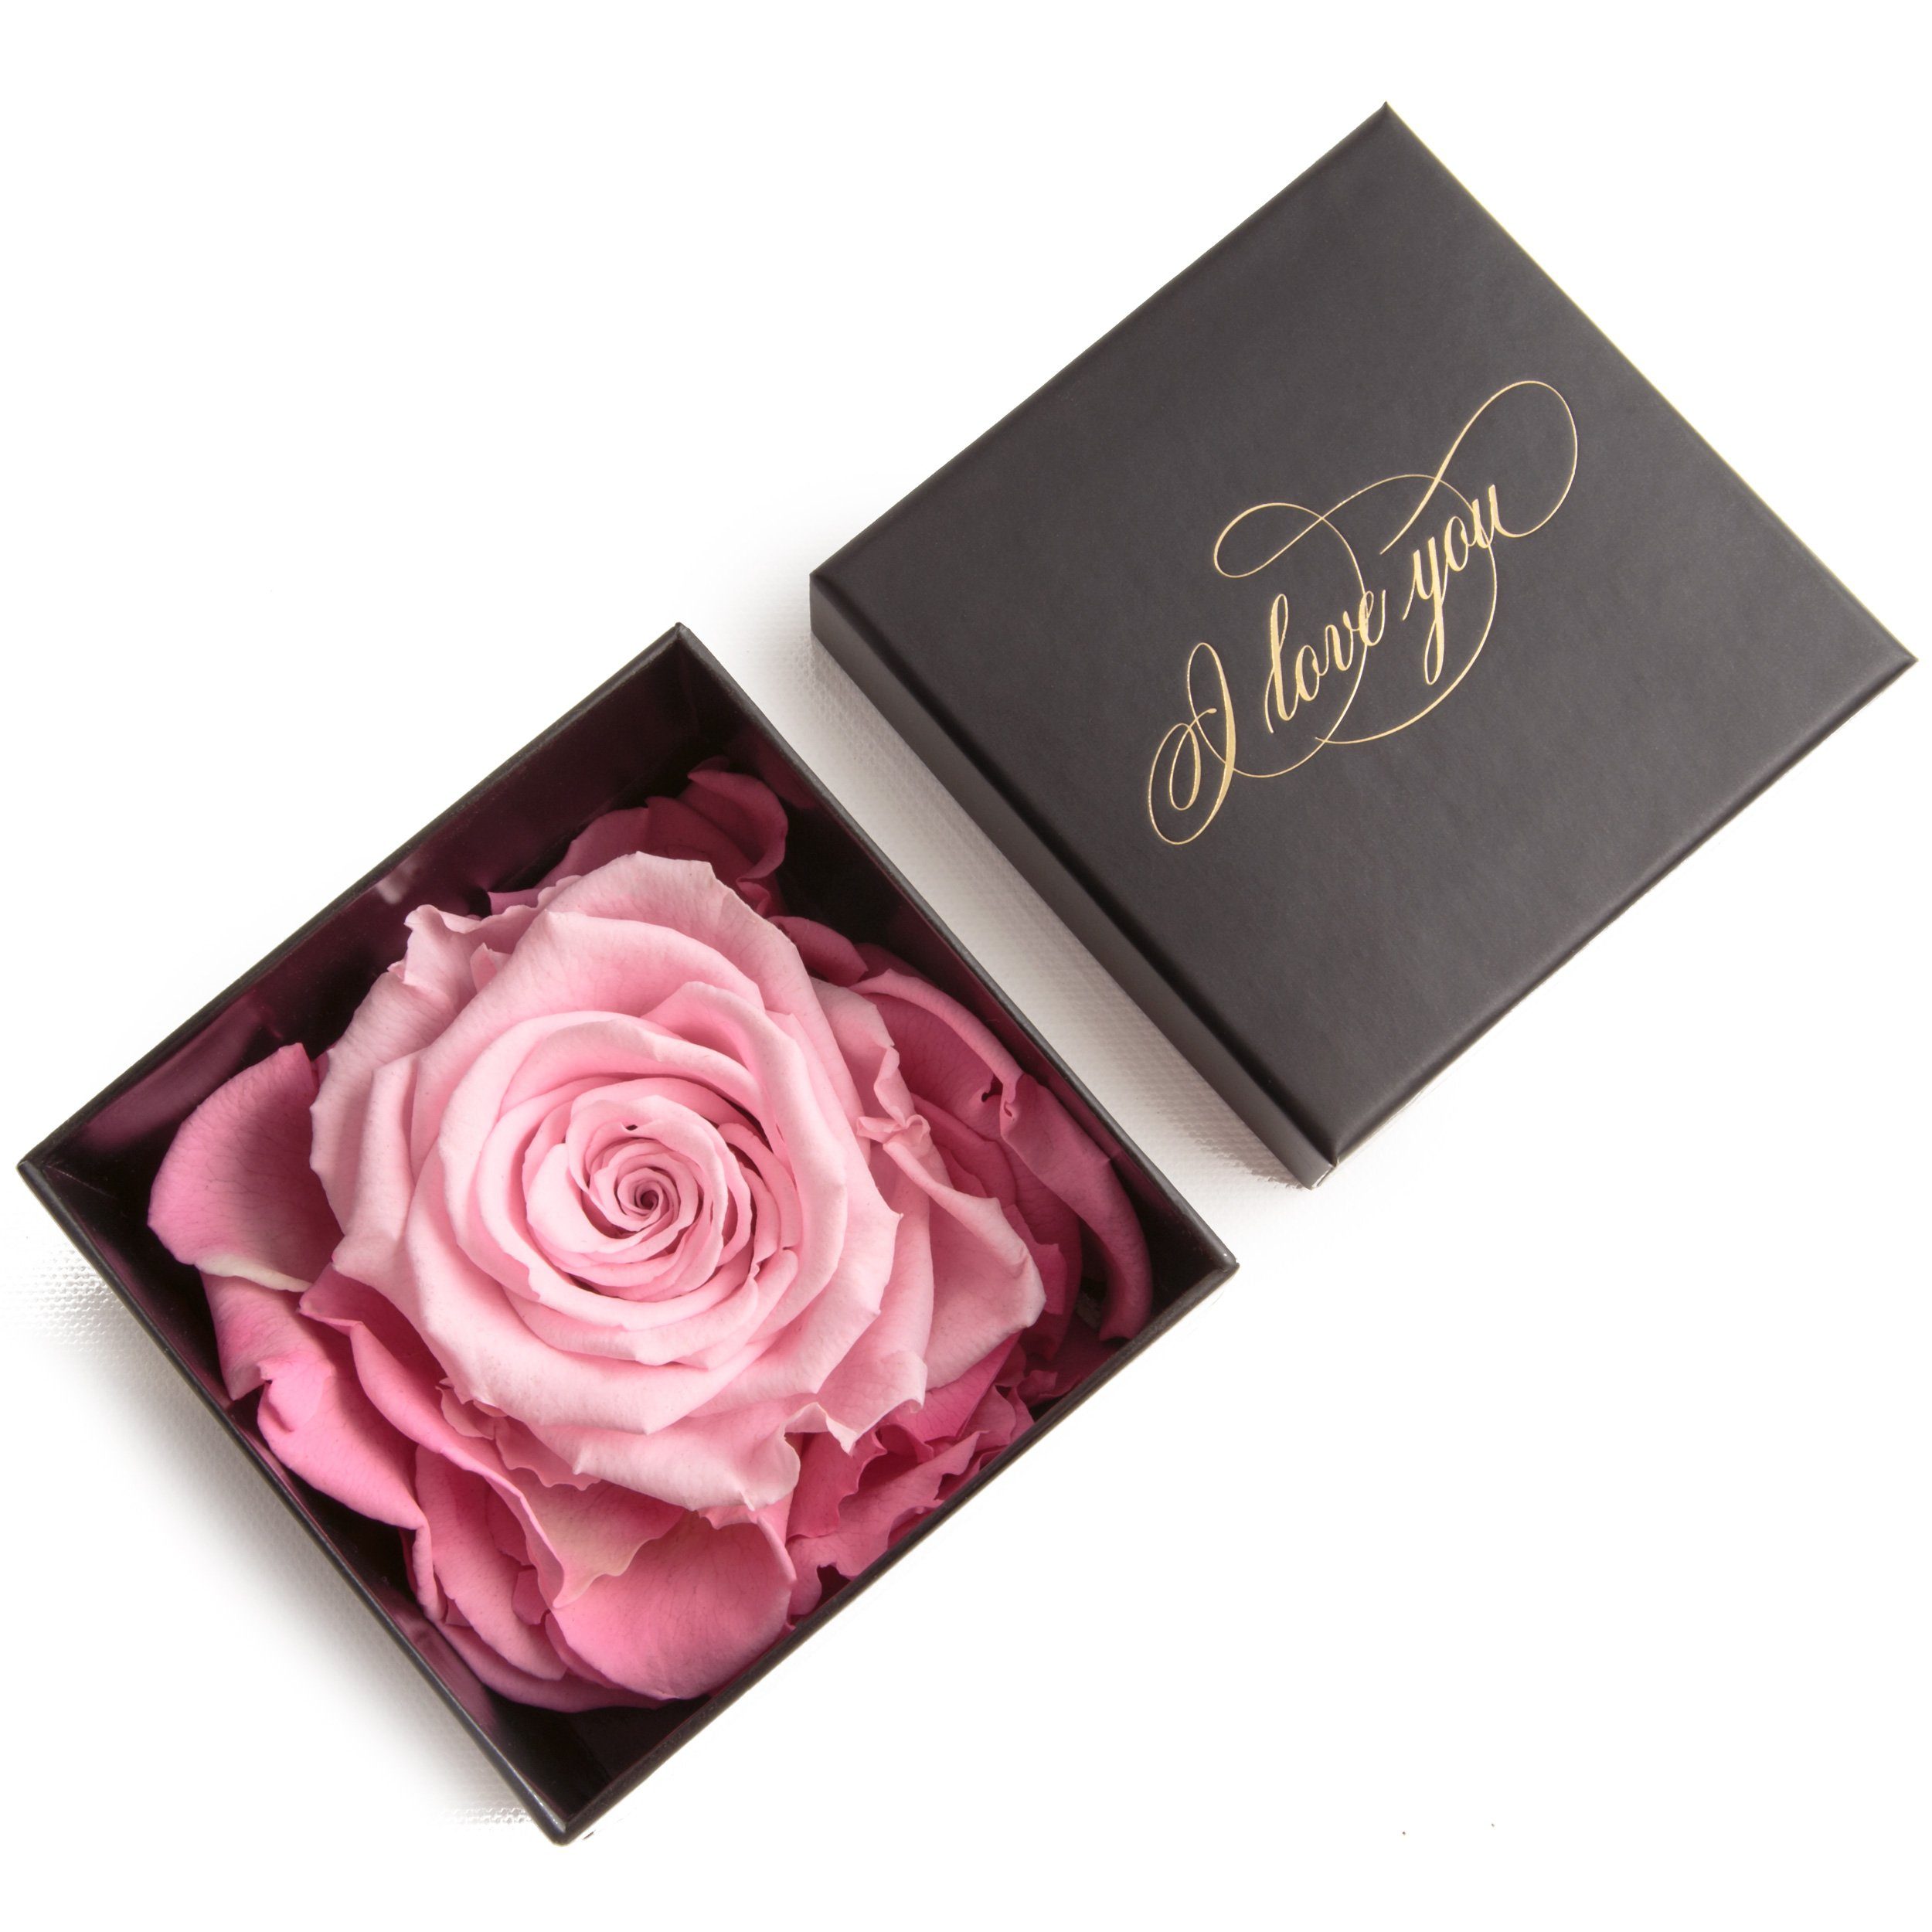 Kunstblume Infinity Rose Box I cm, SCHULZ 6 Geschenk Rose, ROSEMARIE Idee Heidelberg, konserviert Rose Echte Liebesbeweis You Love Rosa Höhe